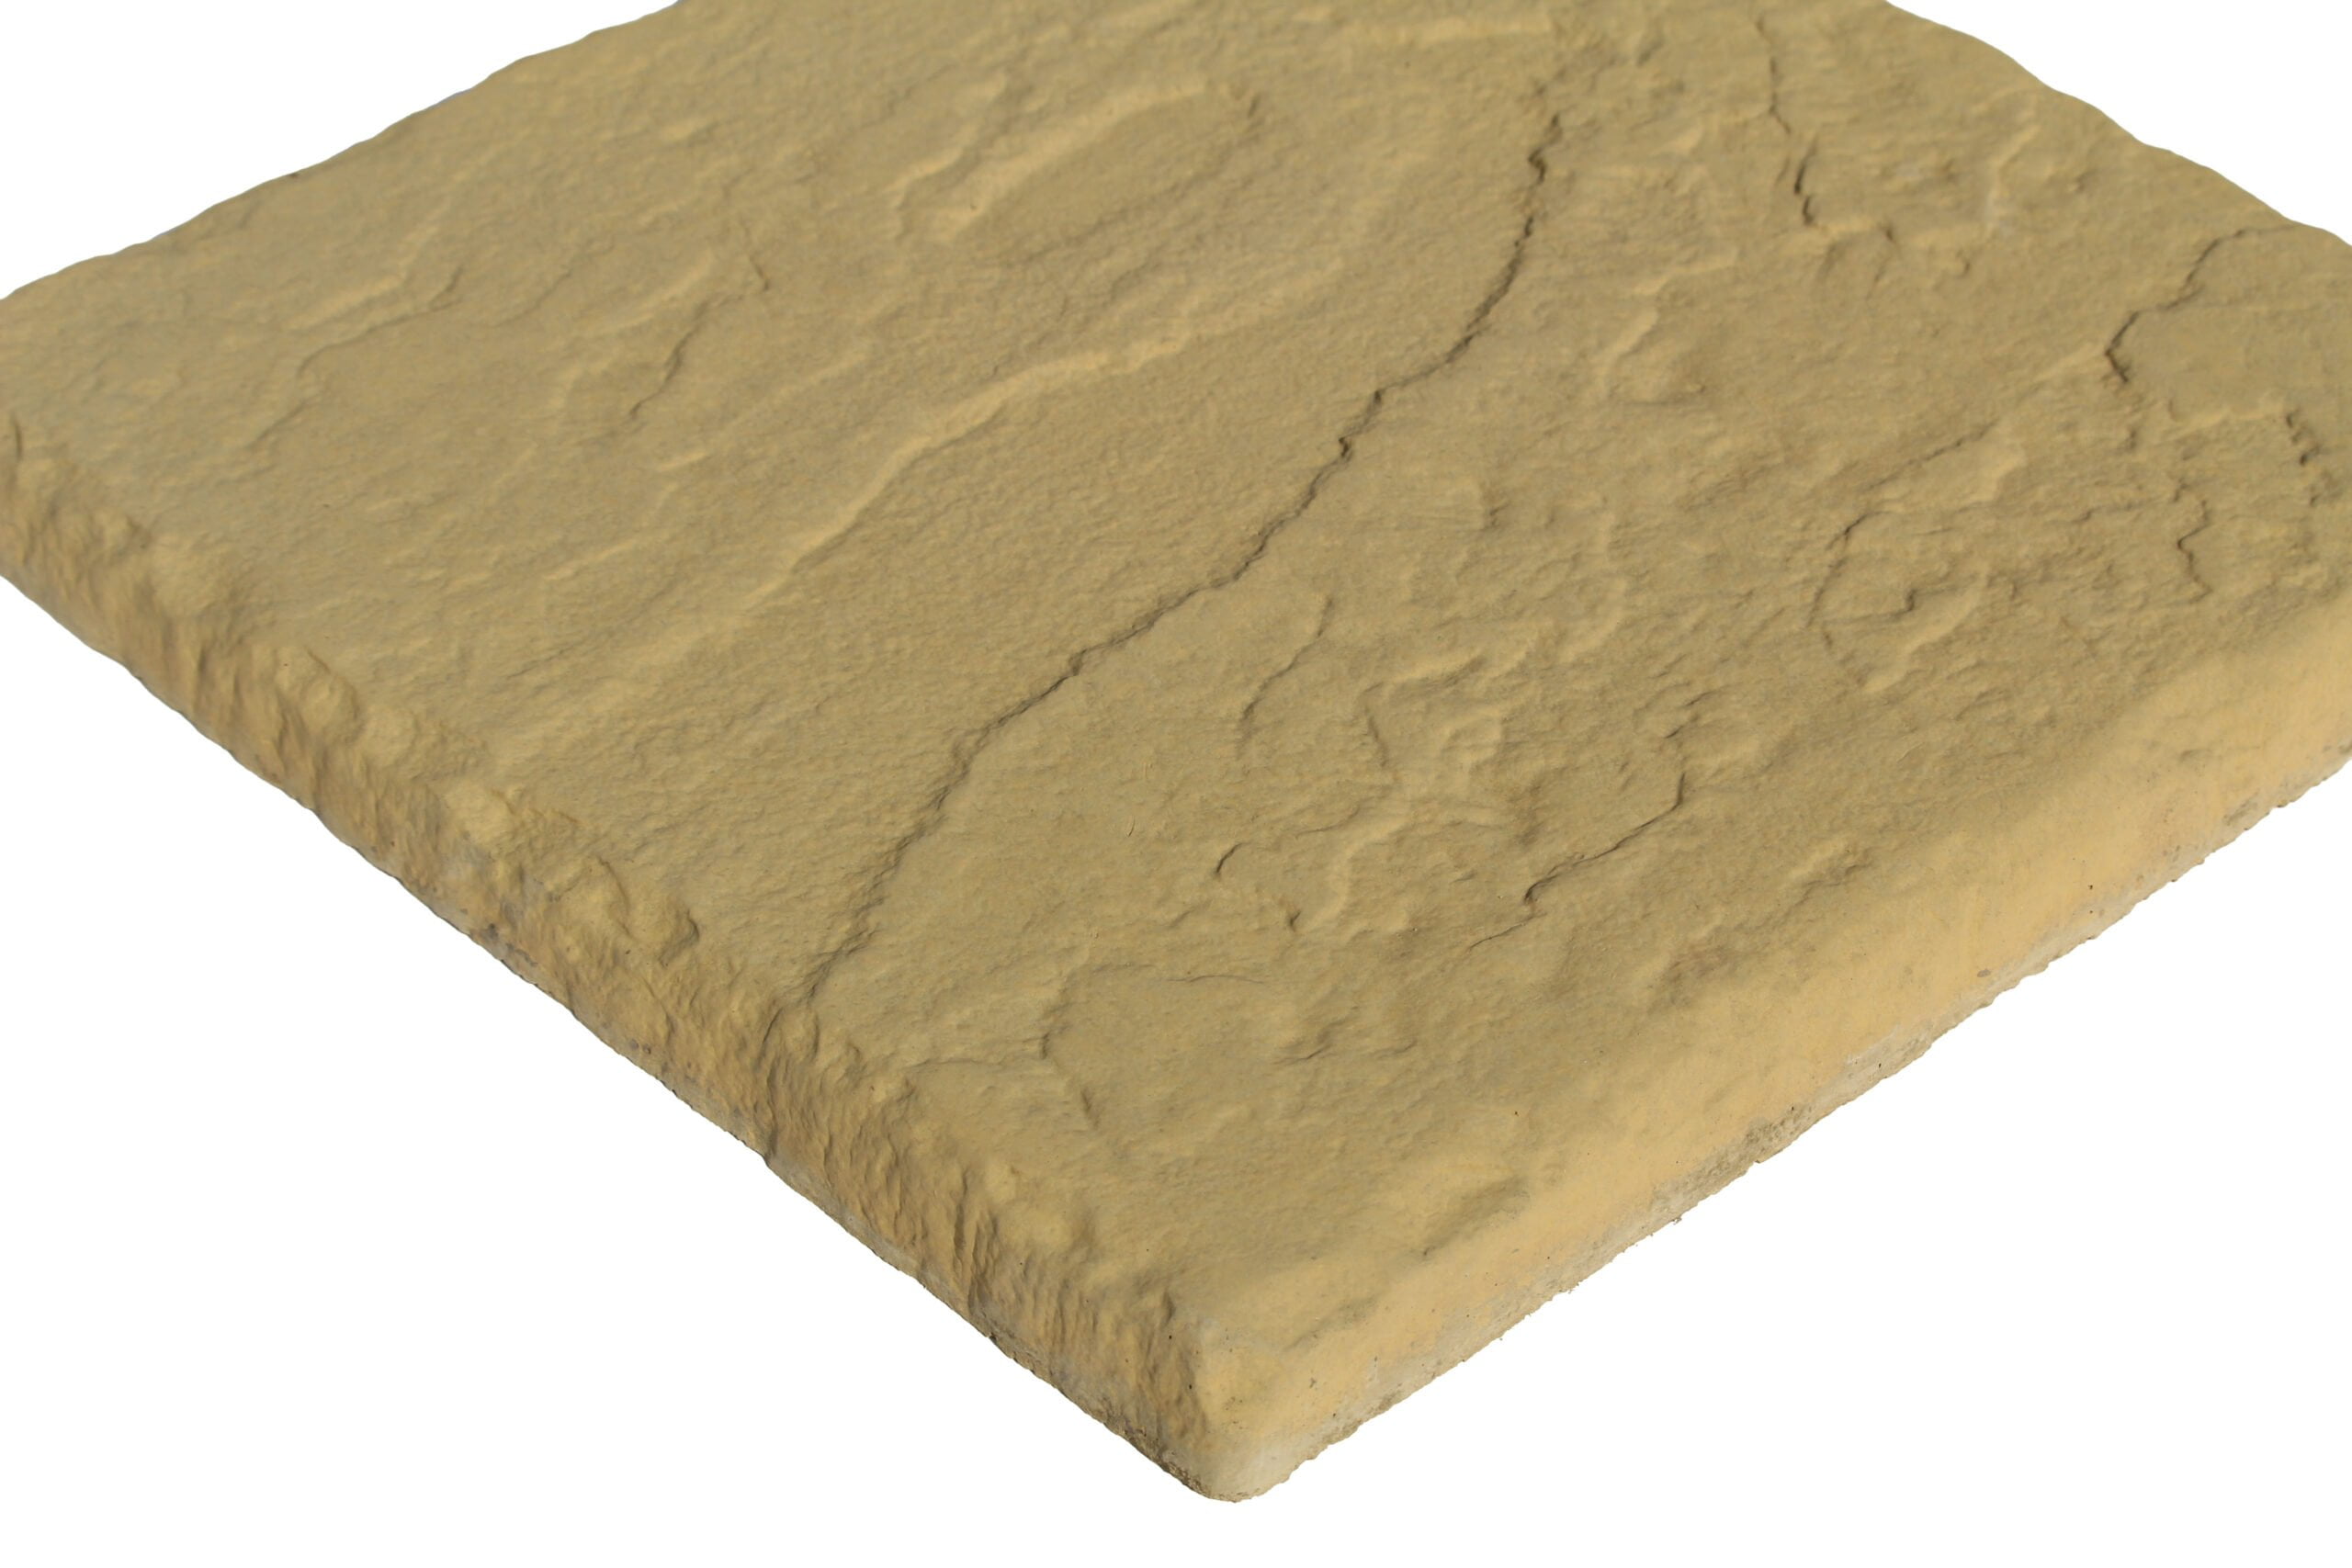 Old York - Sandstone concrete paving slabs